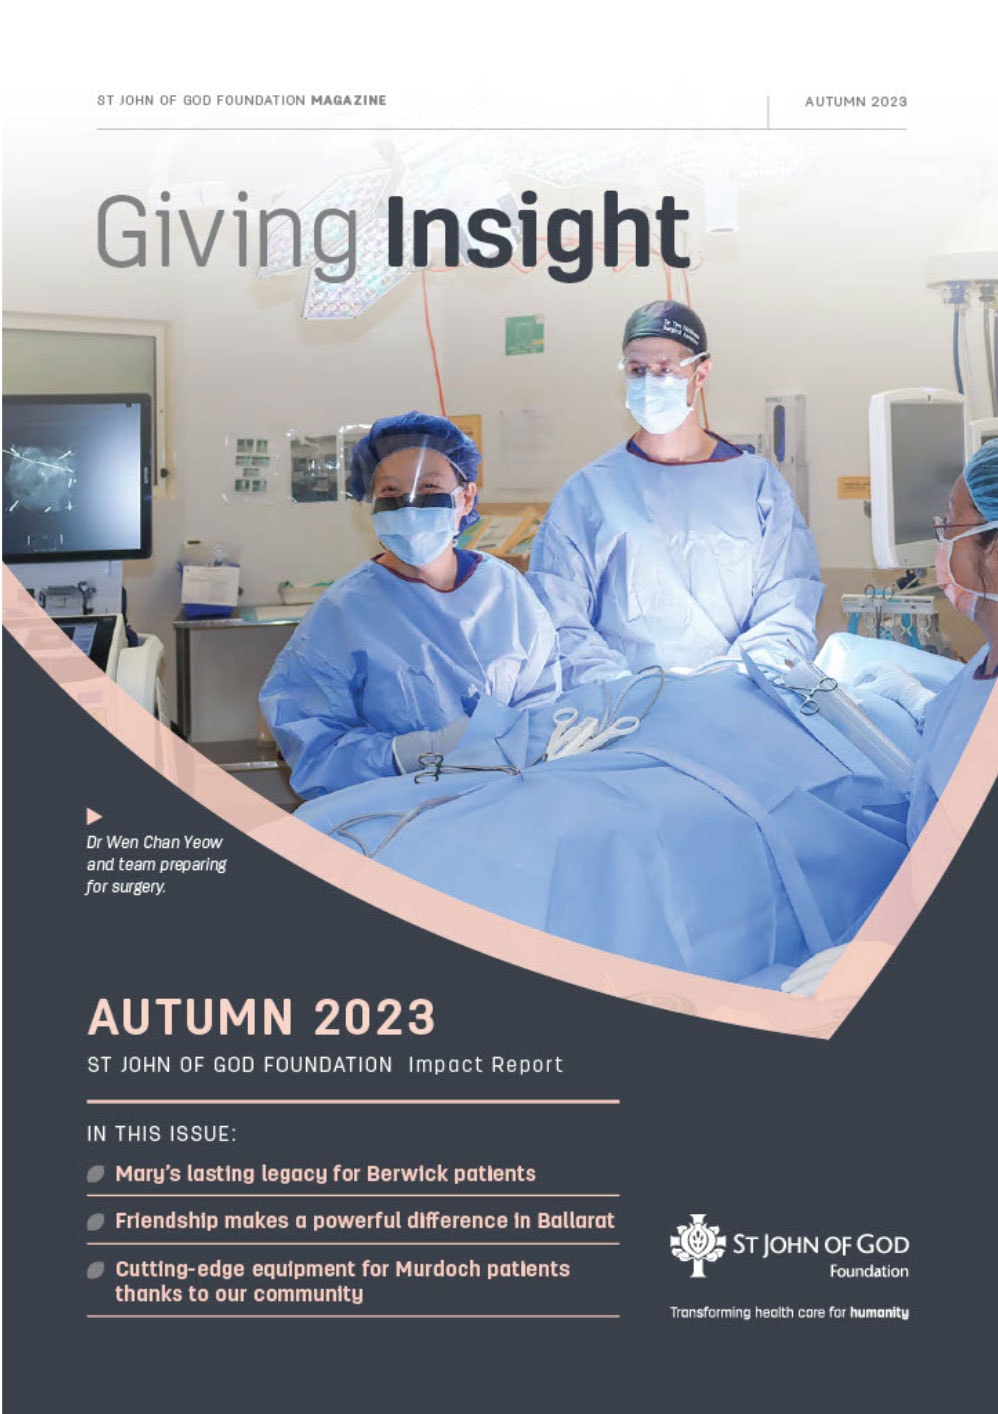 Giving Insight Magazine Autumn 2023 St John of God Foundation Impact Report